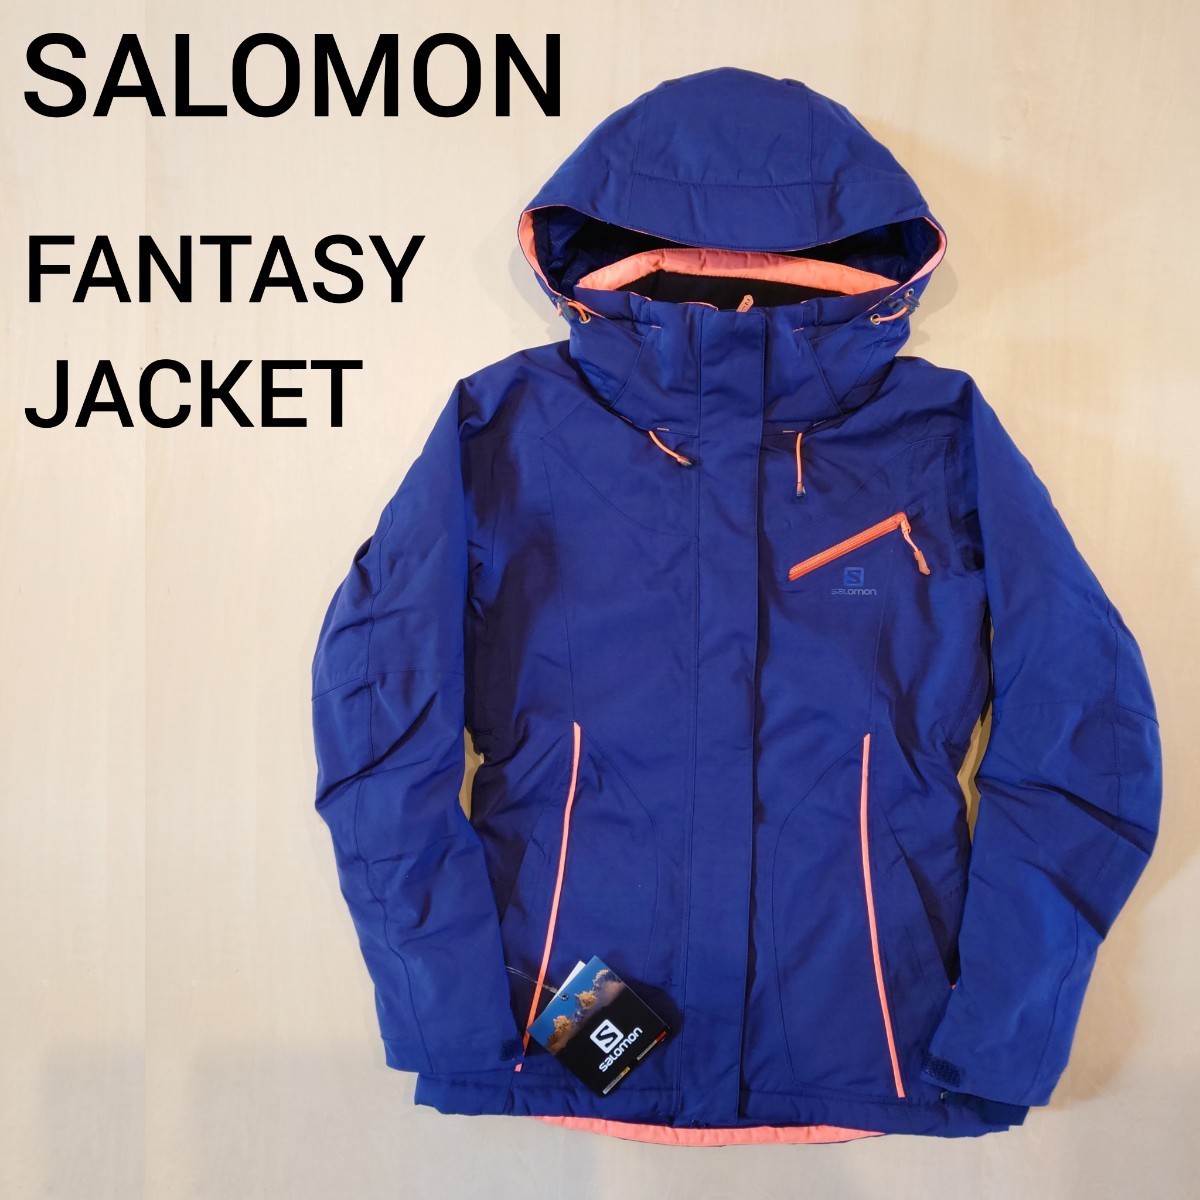 SALOMON スキーウエア FANTASY JACKET WOMEN サロモン ファンタジージャケット 未使用新品 サイズXS 2302